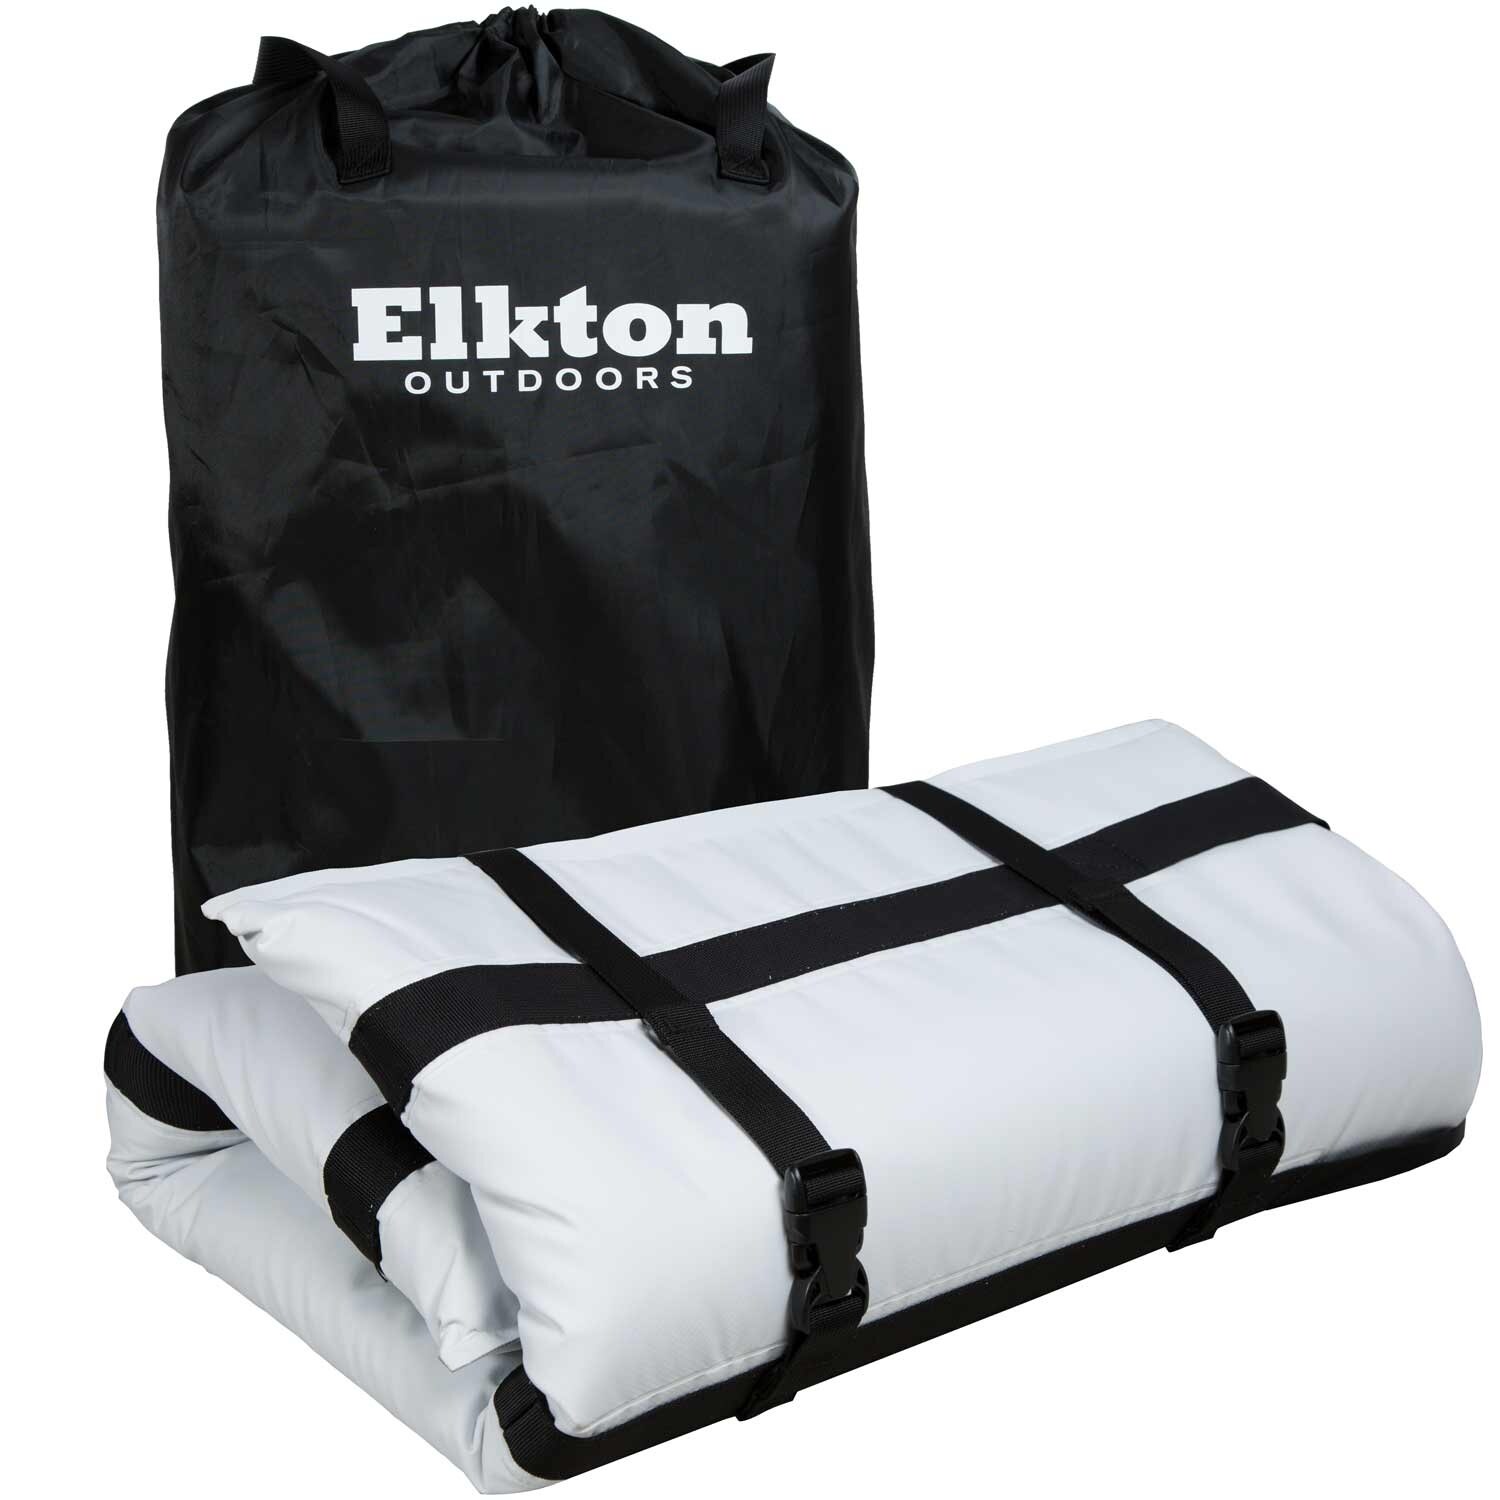 elkton outdoors cooler